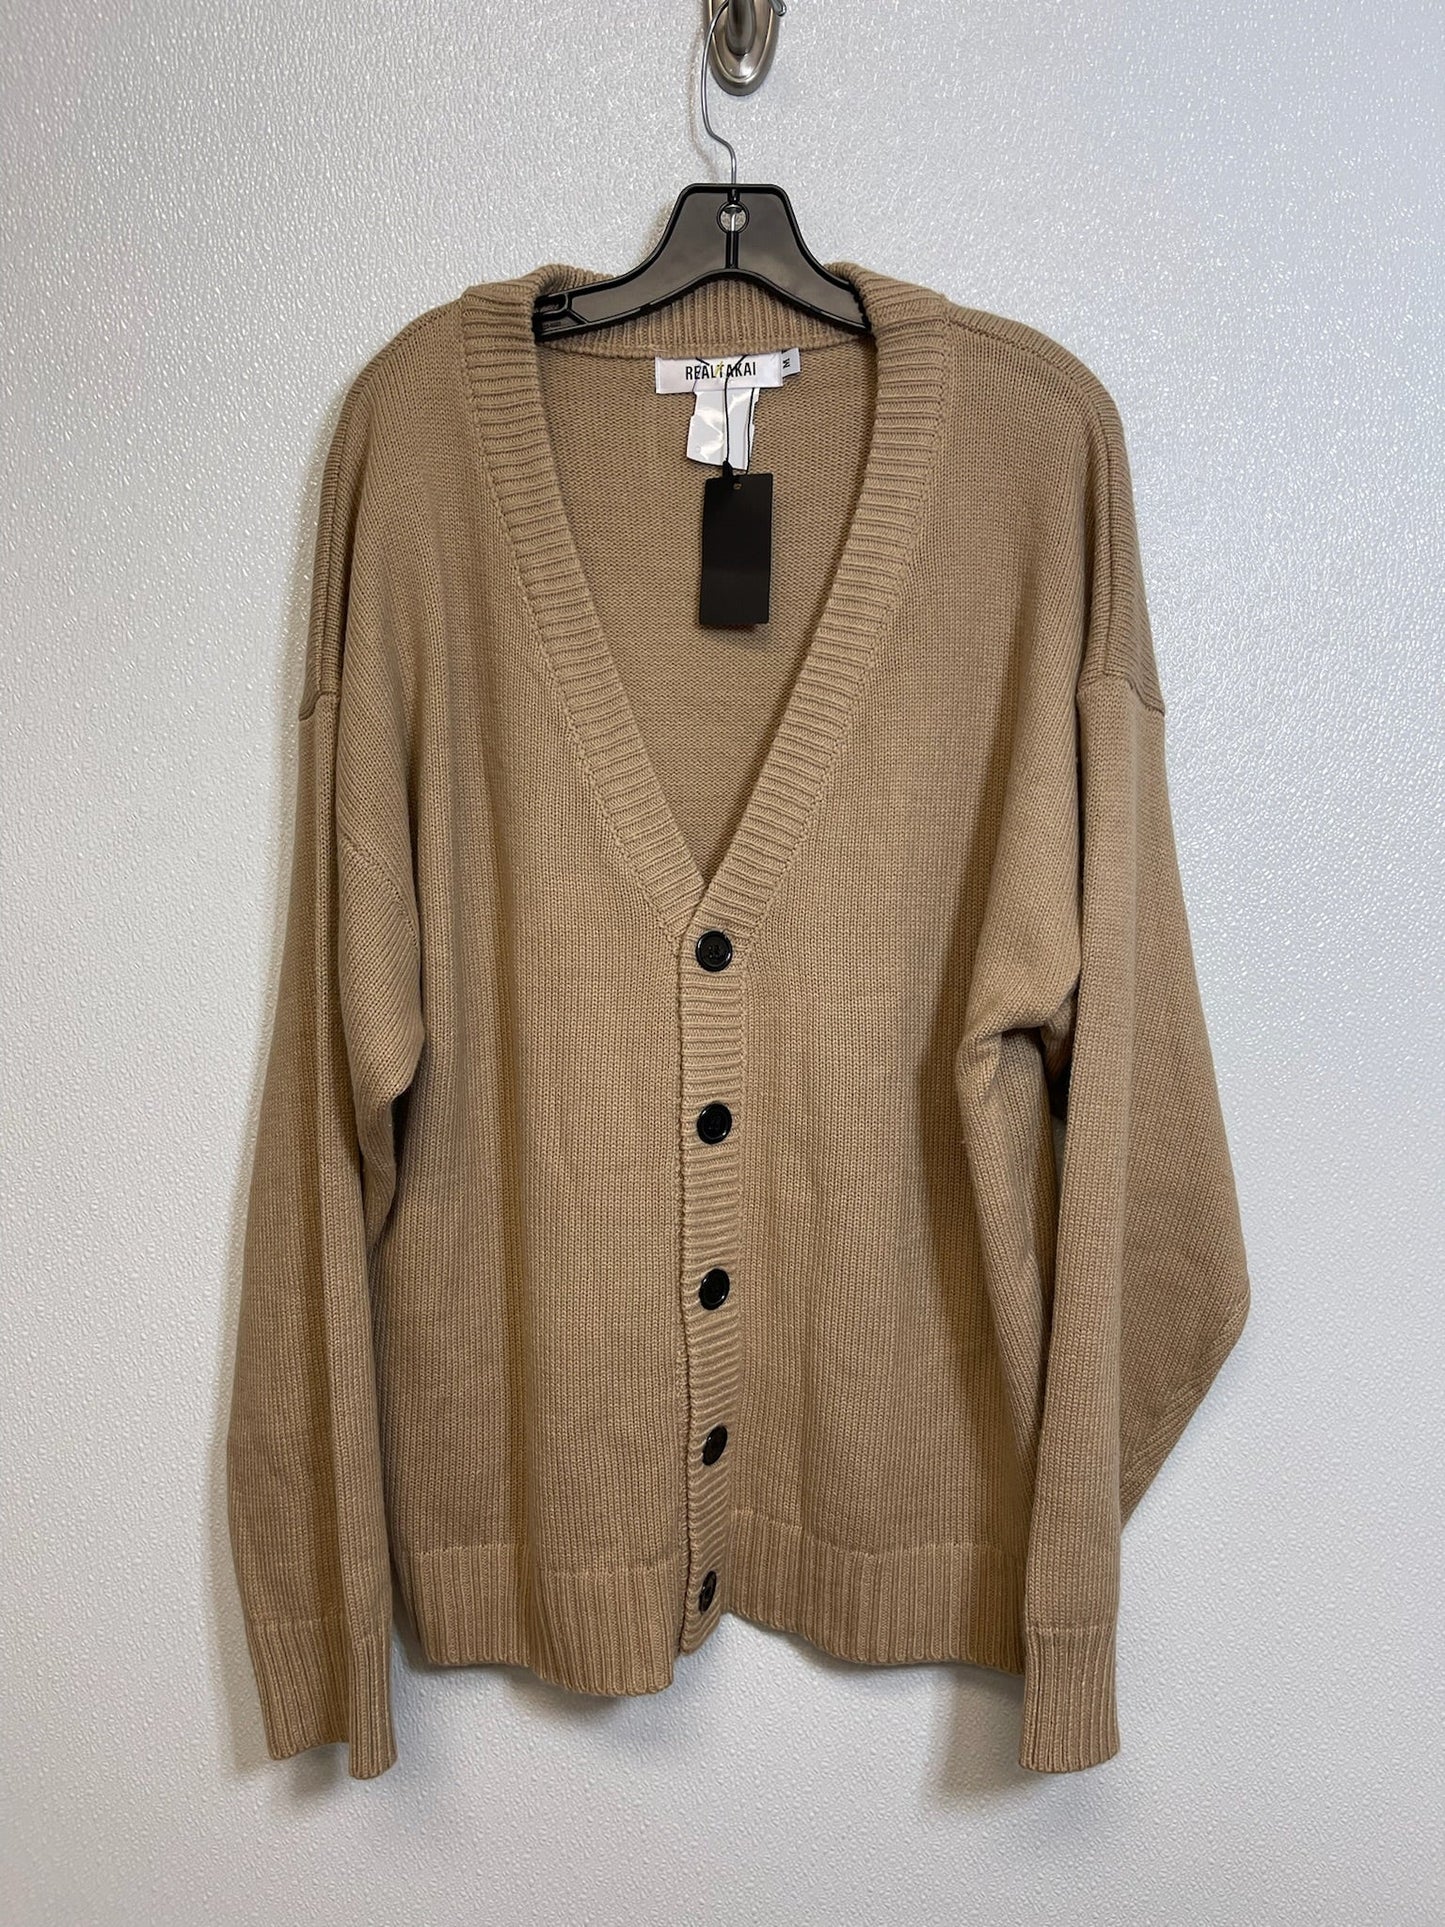 Tan Sweater Cardigan Clothes Mentor, Size M